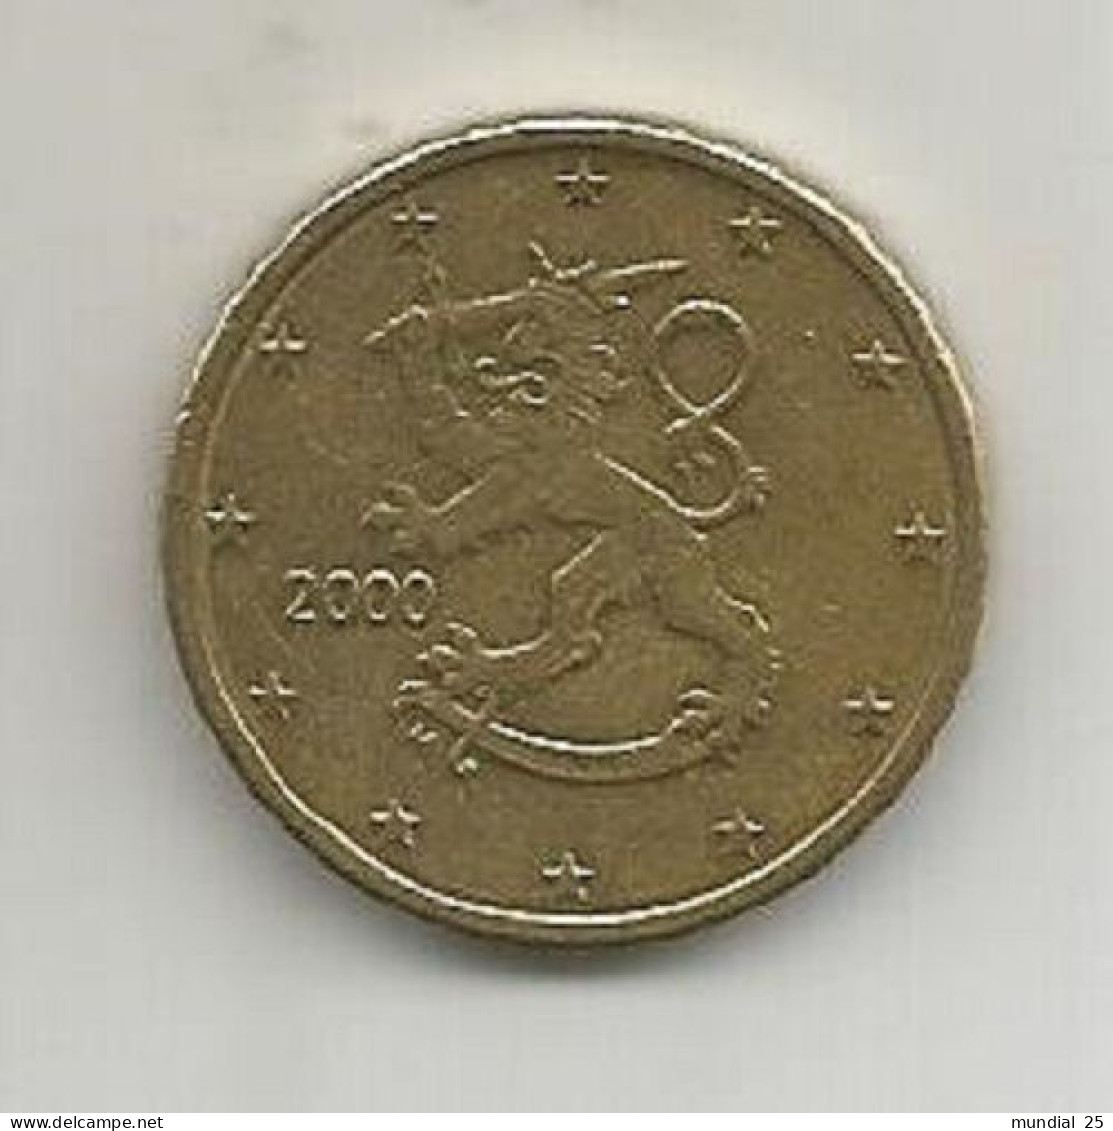 FINLAND 50 EURO CENT 2000 M - Finnland